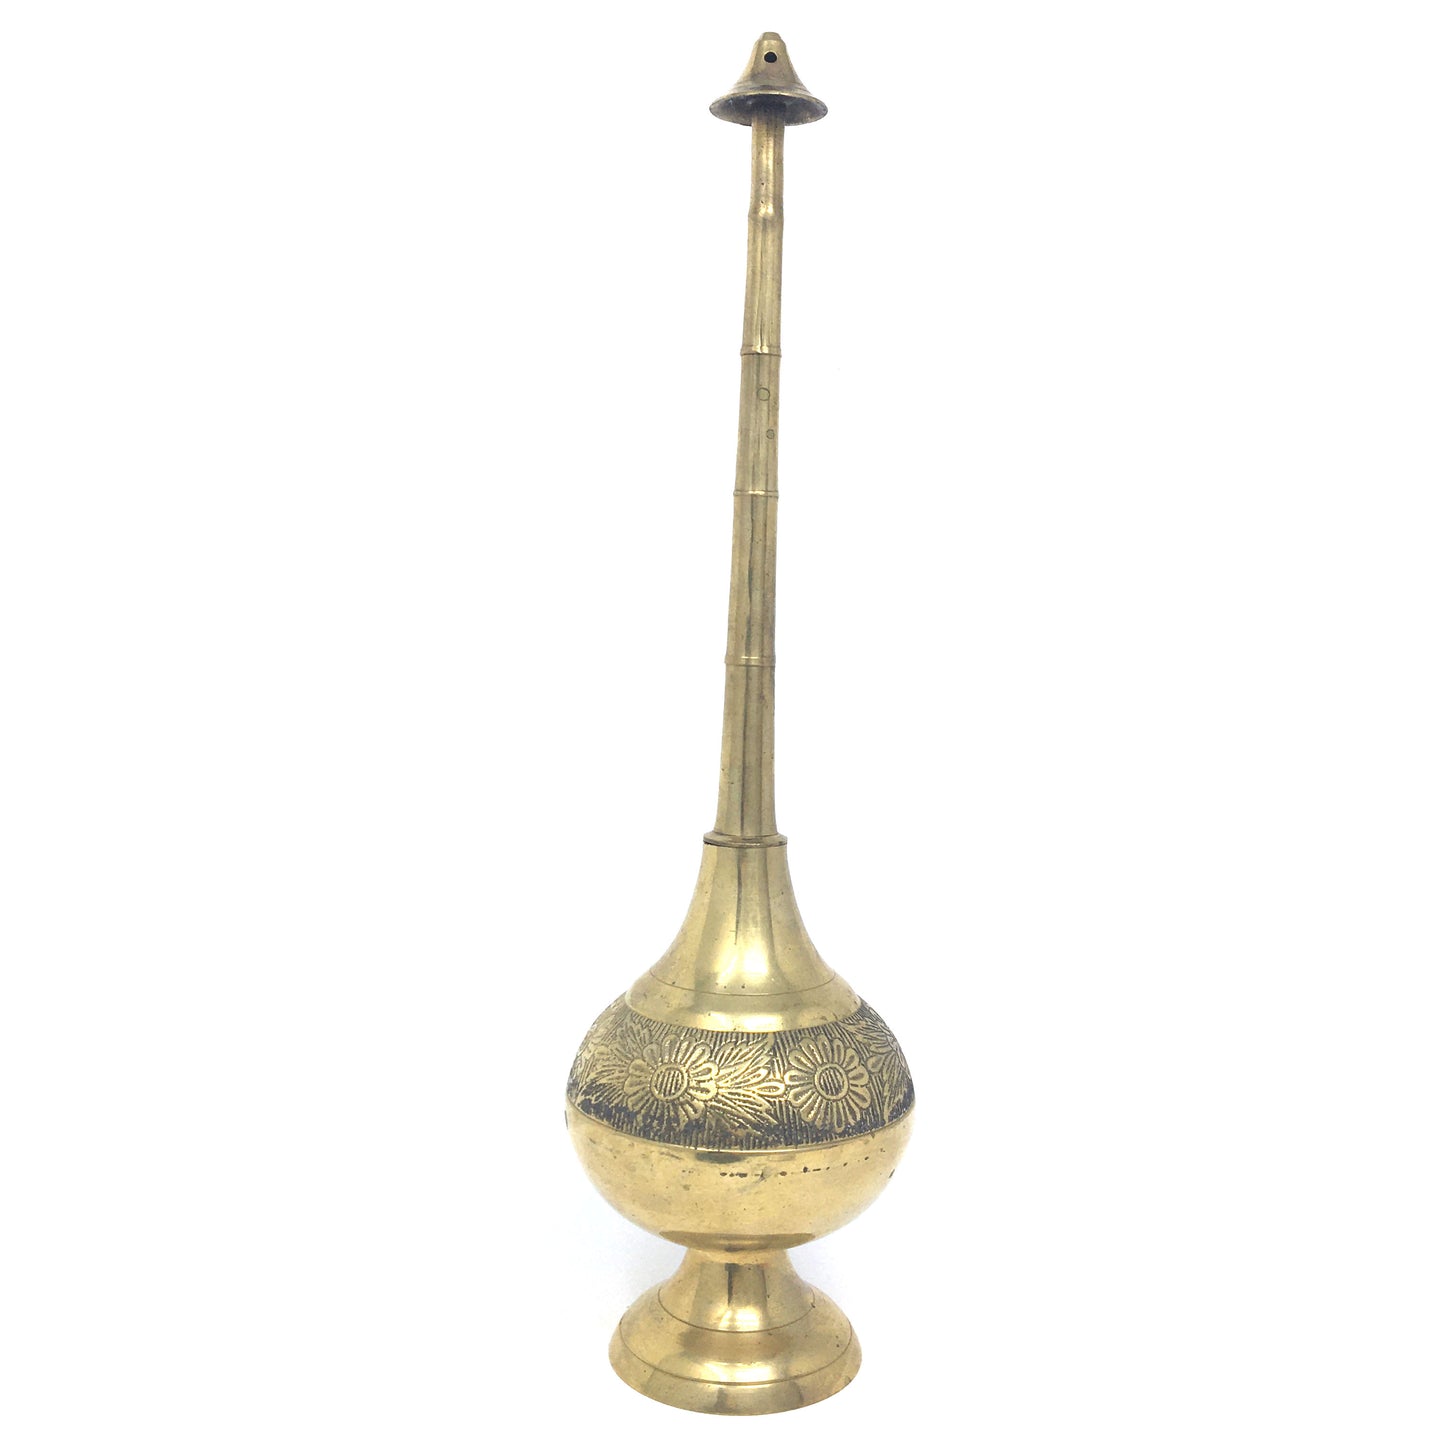 Handcrafted Decorative Brass India Gulabdani Perfume Rose Water Sprinkler 13.5"